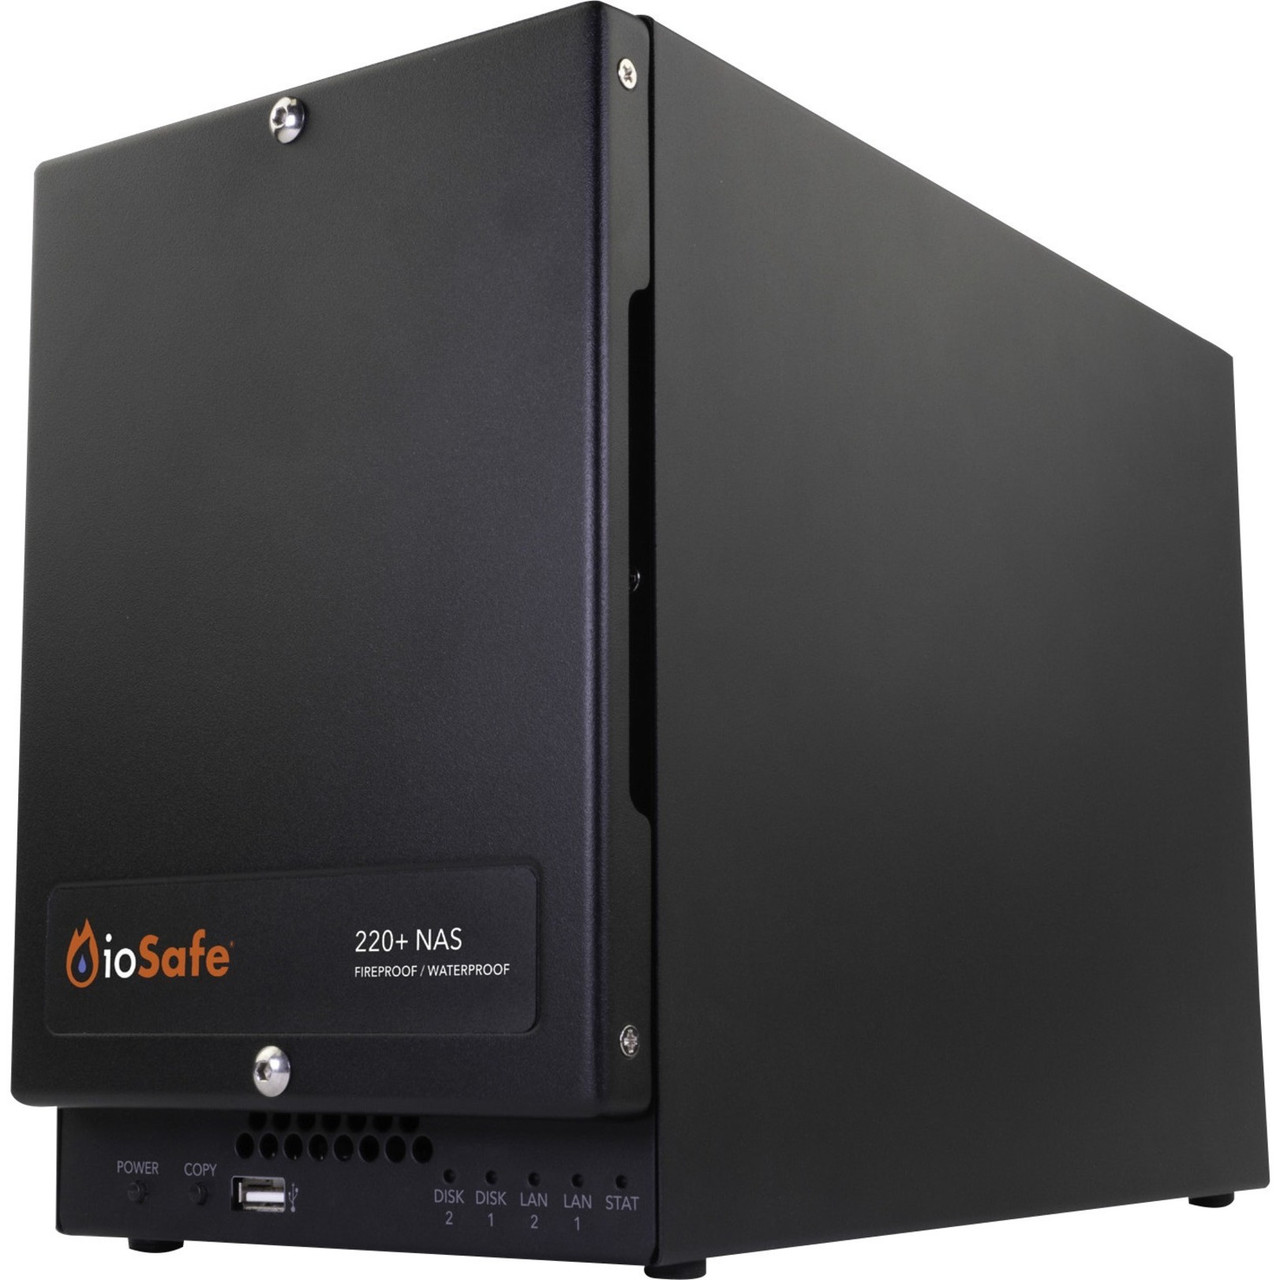 ioSafe 220+ SAN/NAS Storage System - 72200-3842-1200